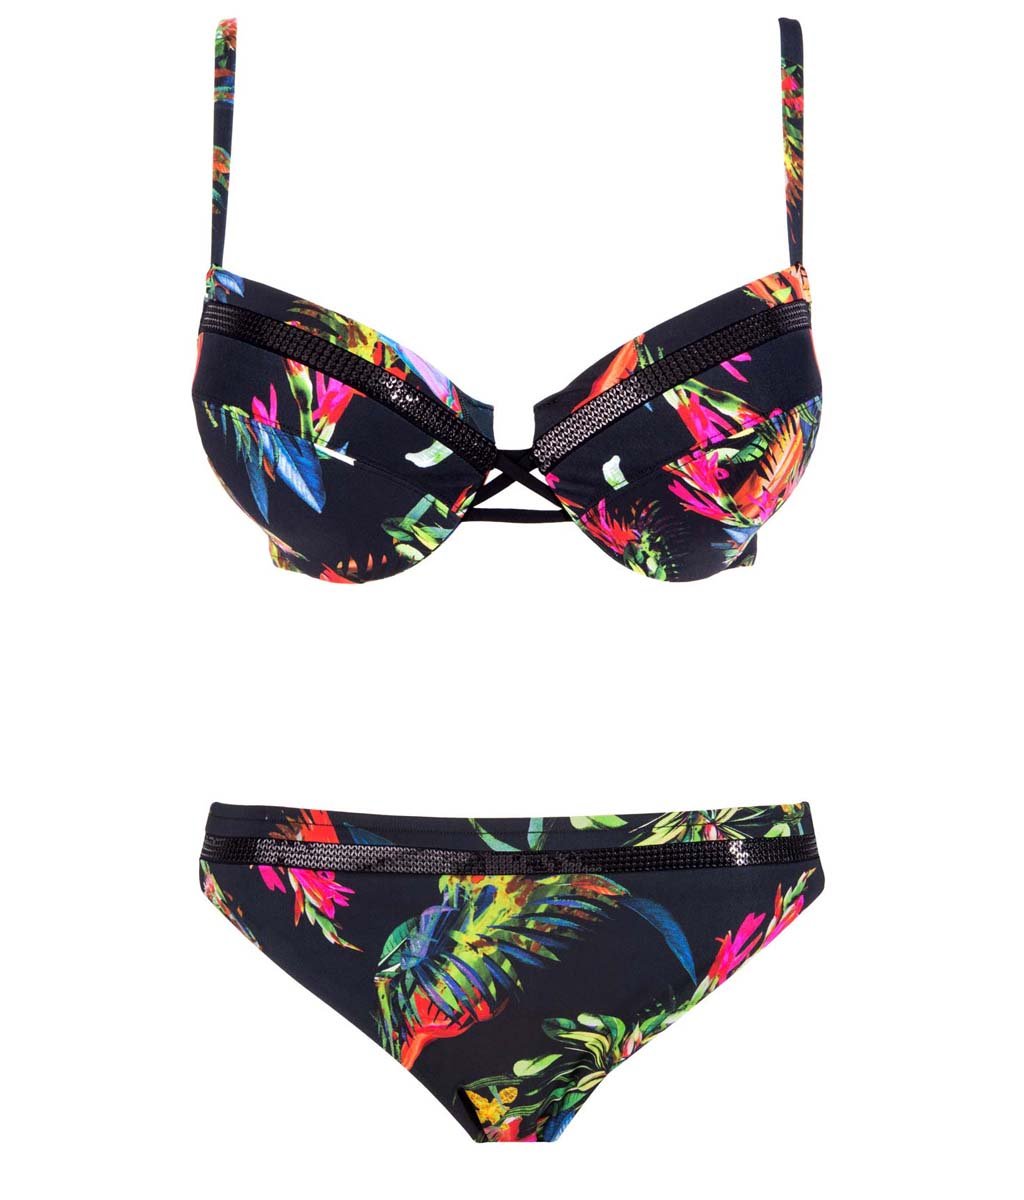 Lise Charmel 'Iris Oiseau' (Oiseau Tropical) Underwired Bikini - Sandra Dee - Product Shot - Front